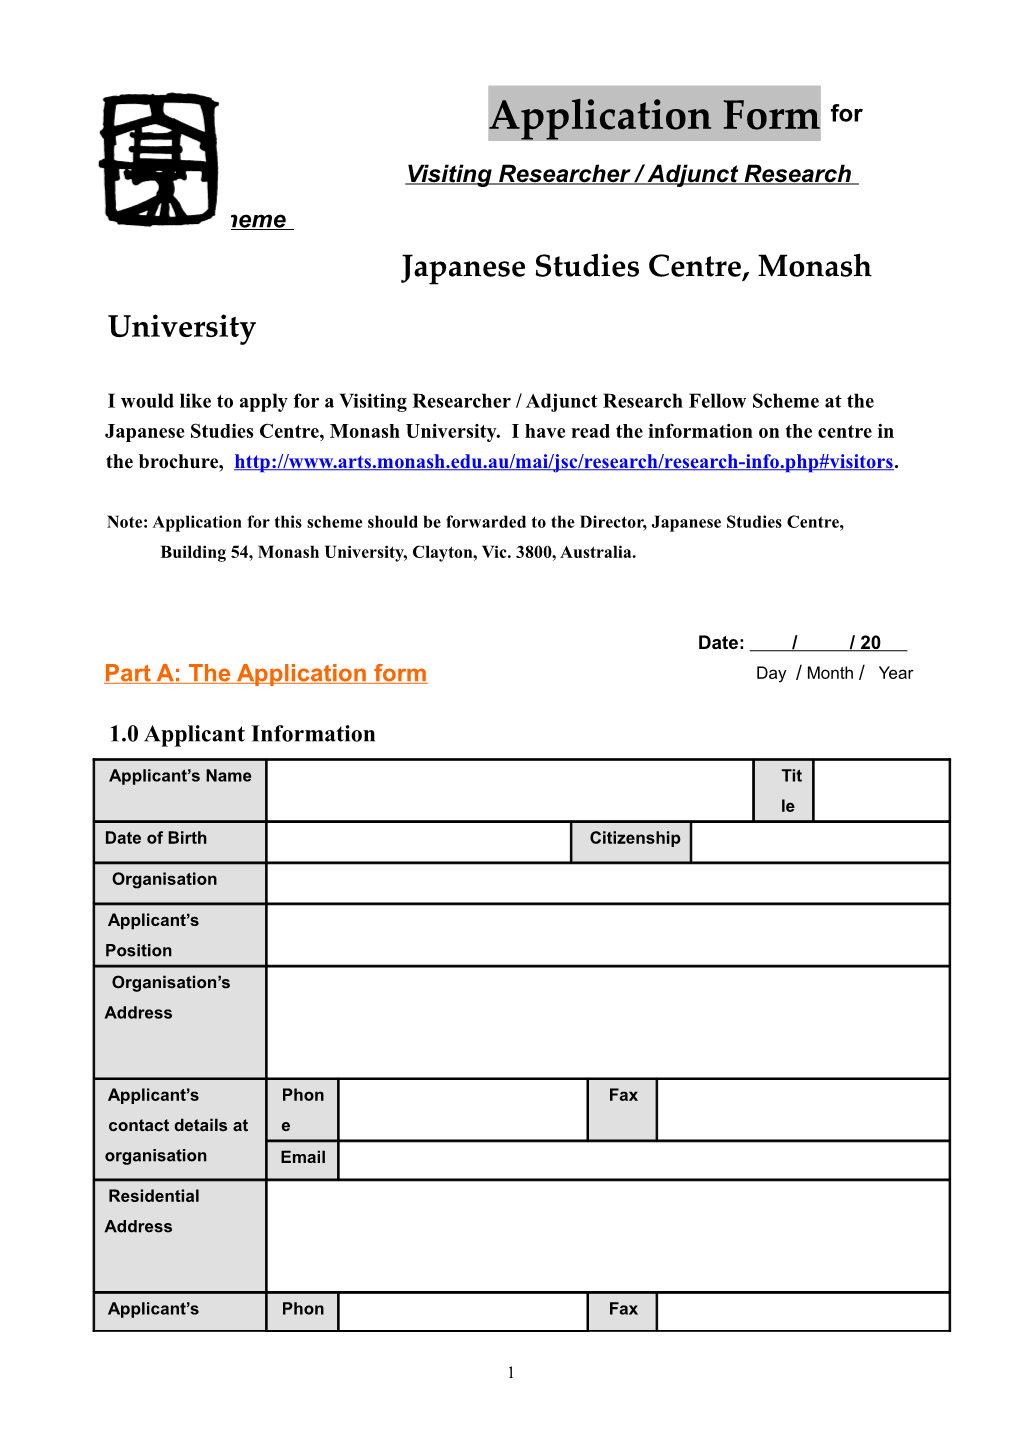 Application Form for Visiting Researcher Scheme